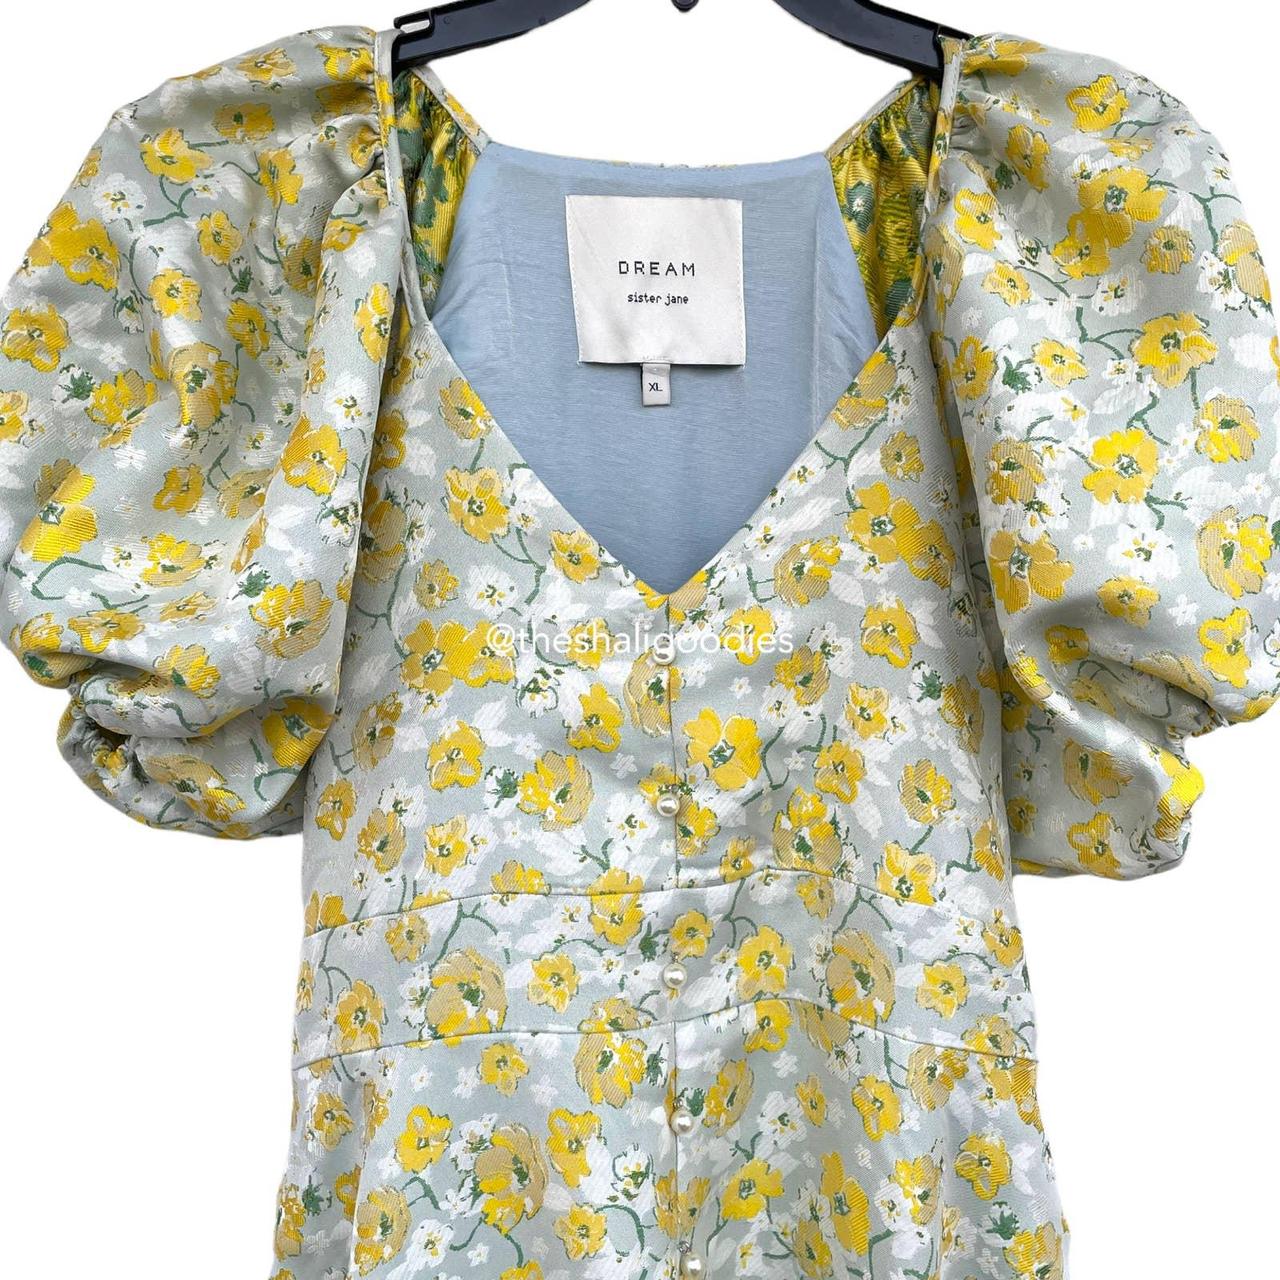 Product Image 3 - DREAM SISTER JANE Dress

**Actual color